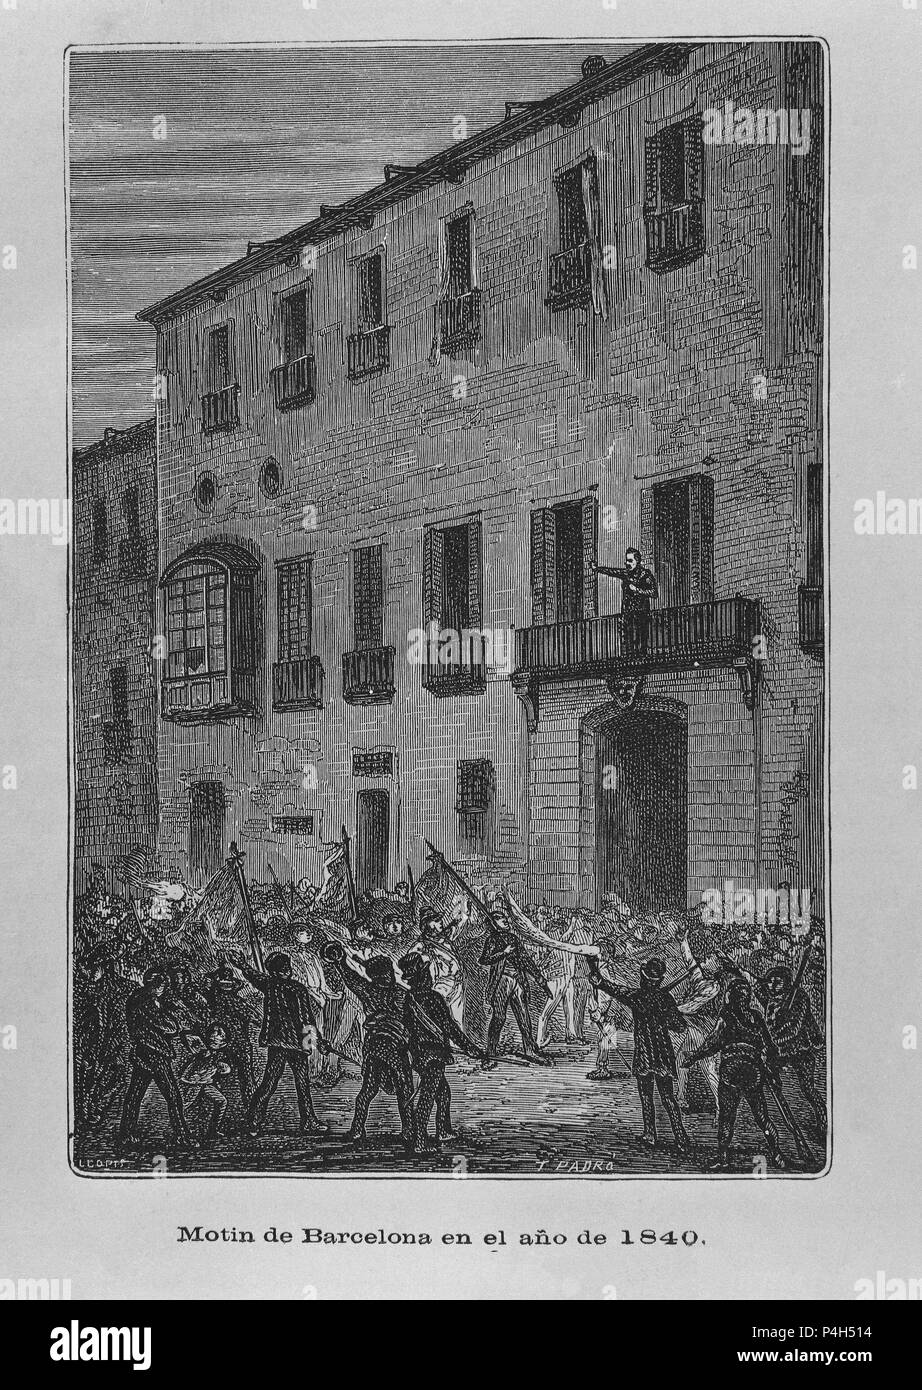 MOTIN DE BARCELONA - 1840 - GRABADO SIGLO XIX. Author: J. Padro (19th cent.). Location: MUSEO ROMANTICO-GRABADO, MADRID, SPAIN. Stock Photo